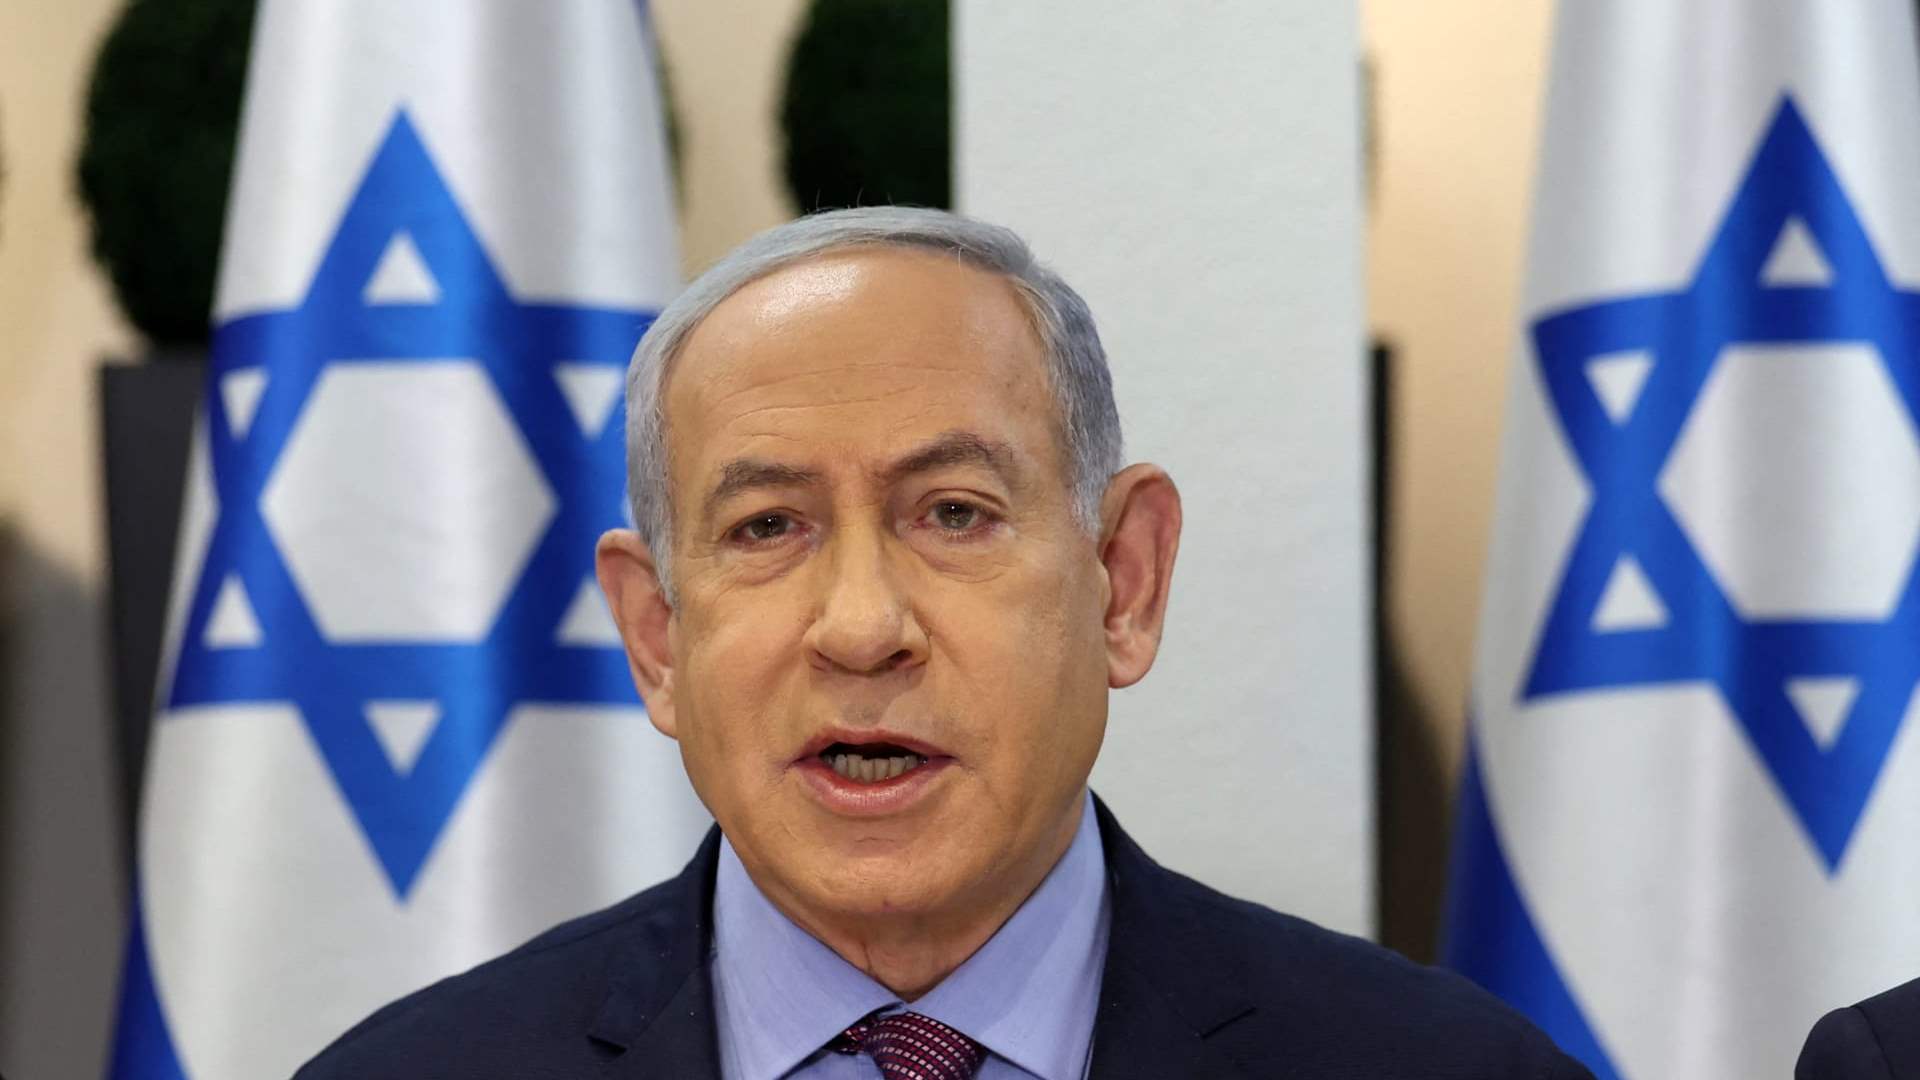 Netanyahu says Blinken assured him US will cancel limits on weapons supplies